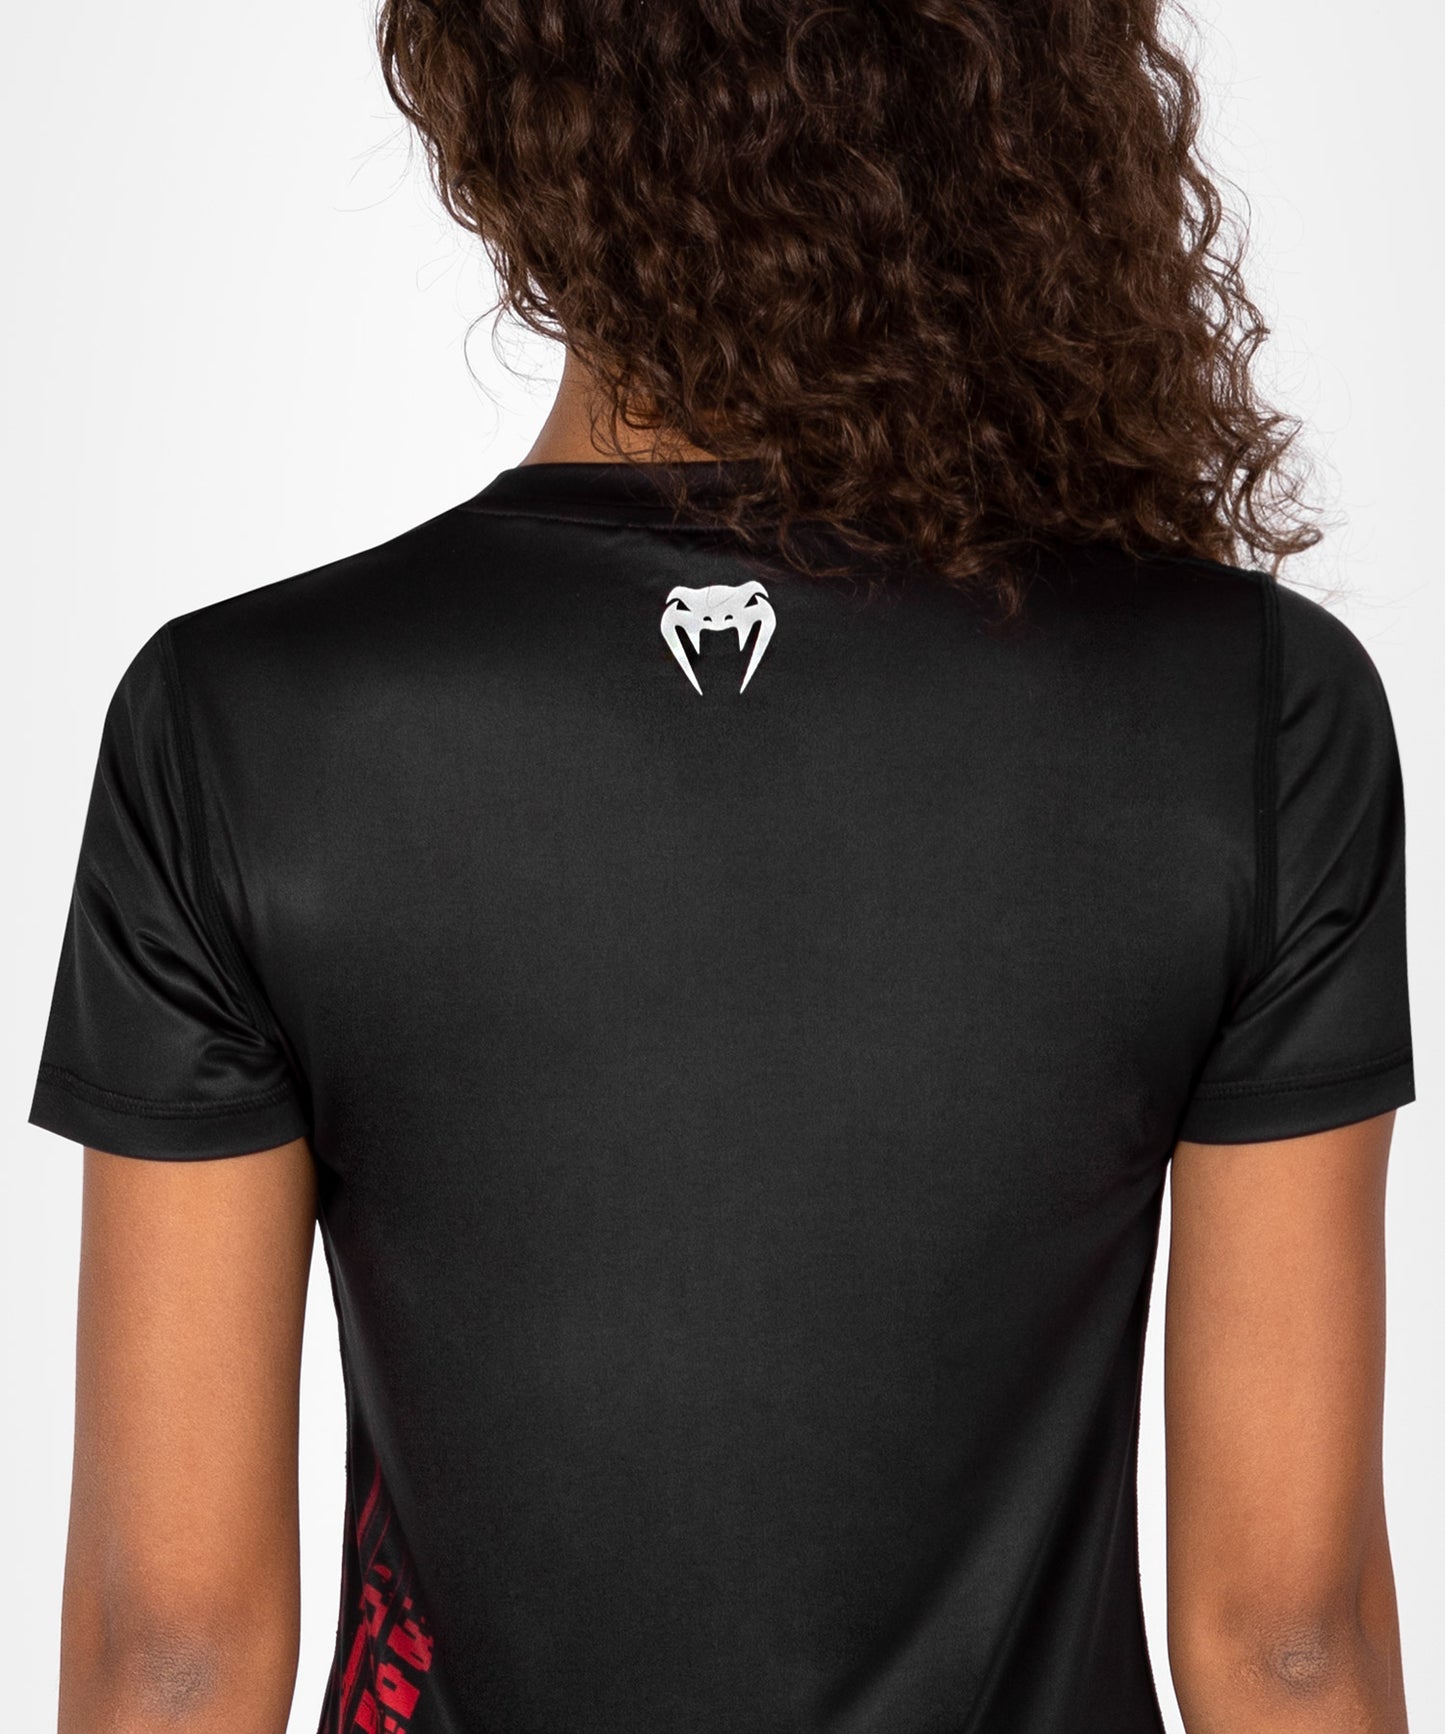 UFC Venum Performance Institute 2.0 Camiseta Dry-Tech para Mujer - Negra/Roja